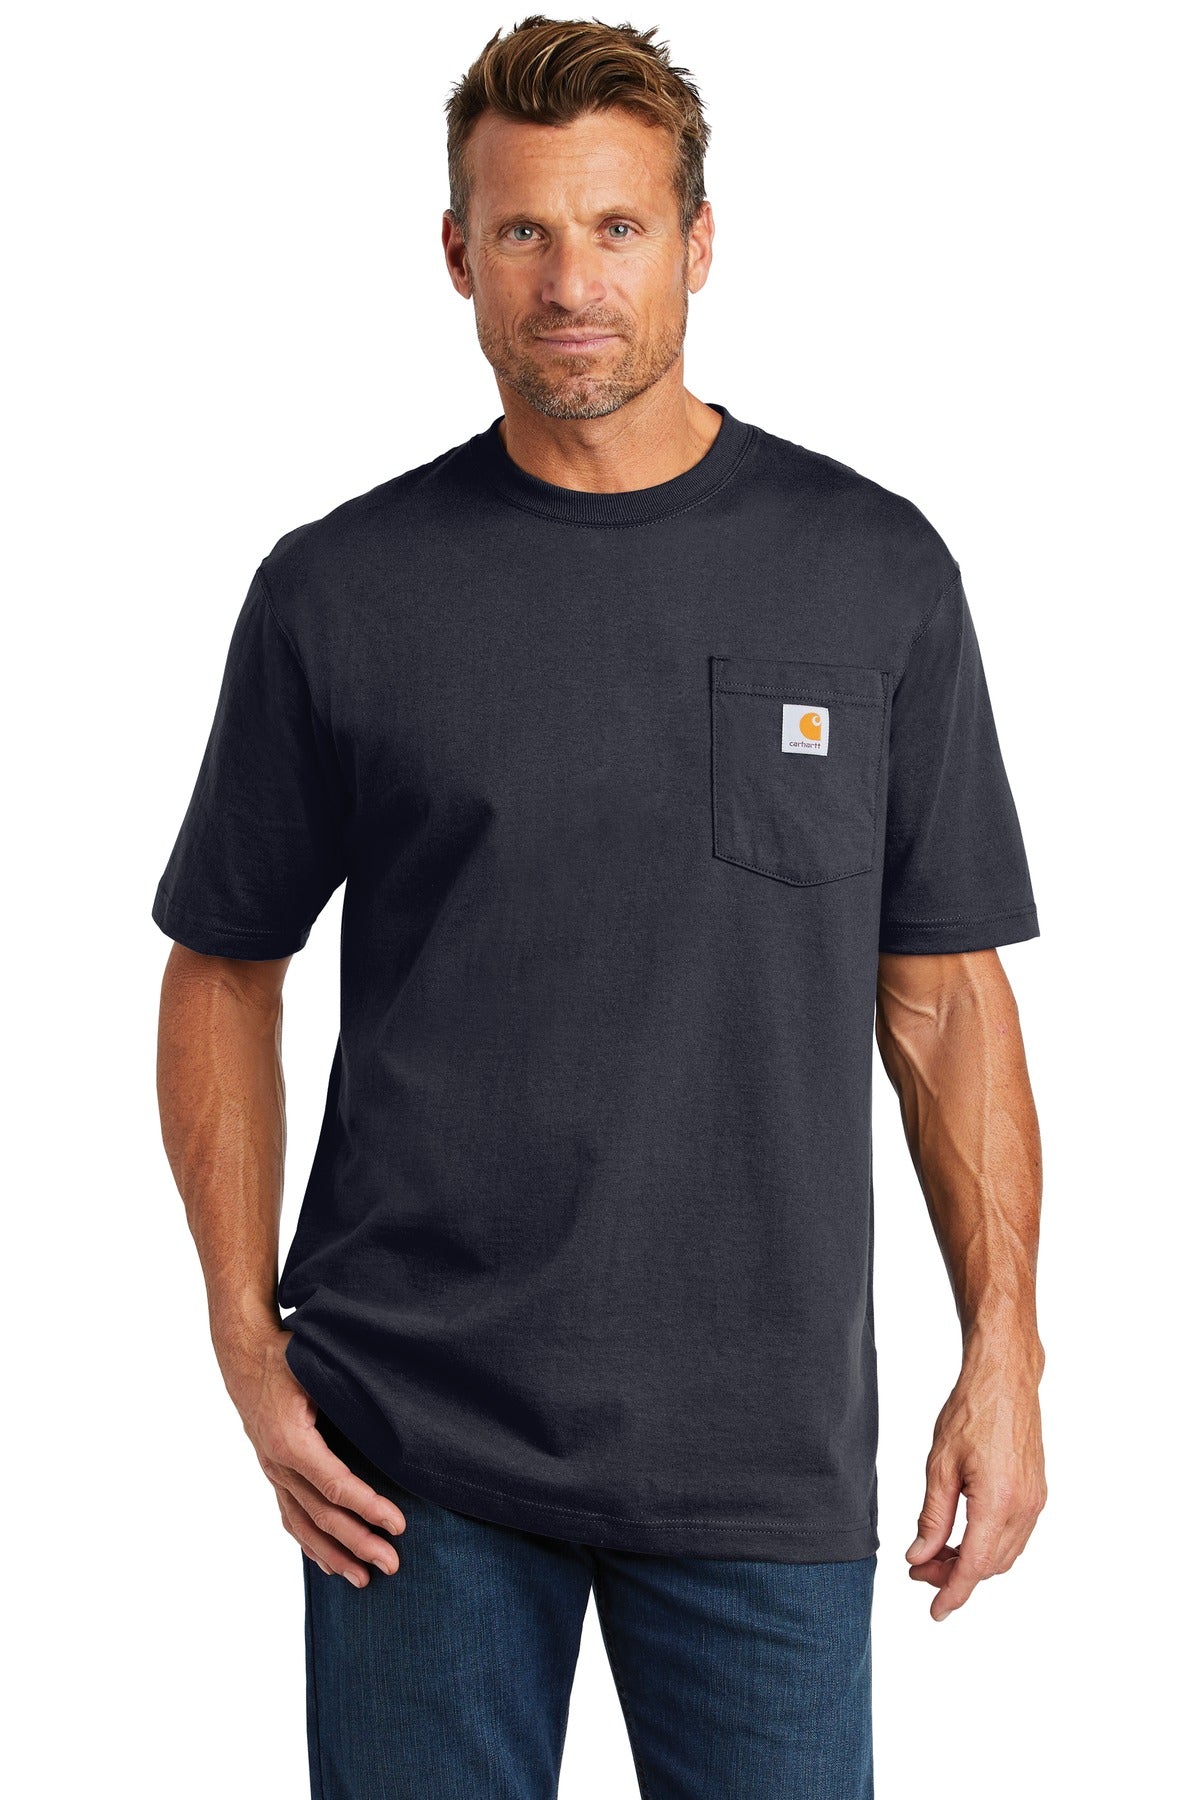 CARHARTT / DICKIES Carhartt SEDONA - Tee-shirt Homme navy